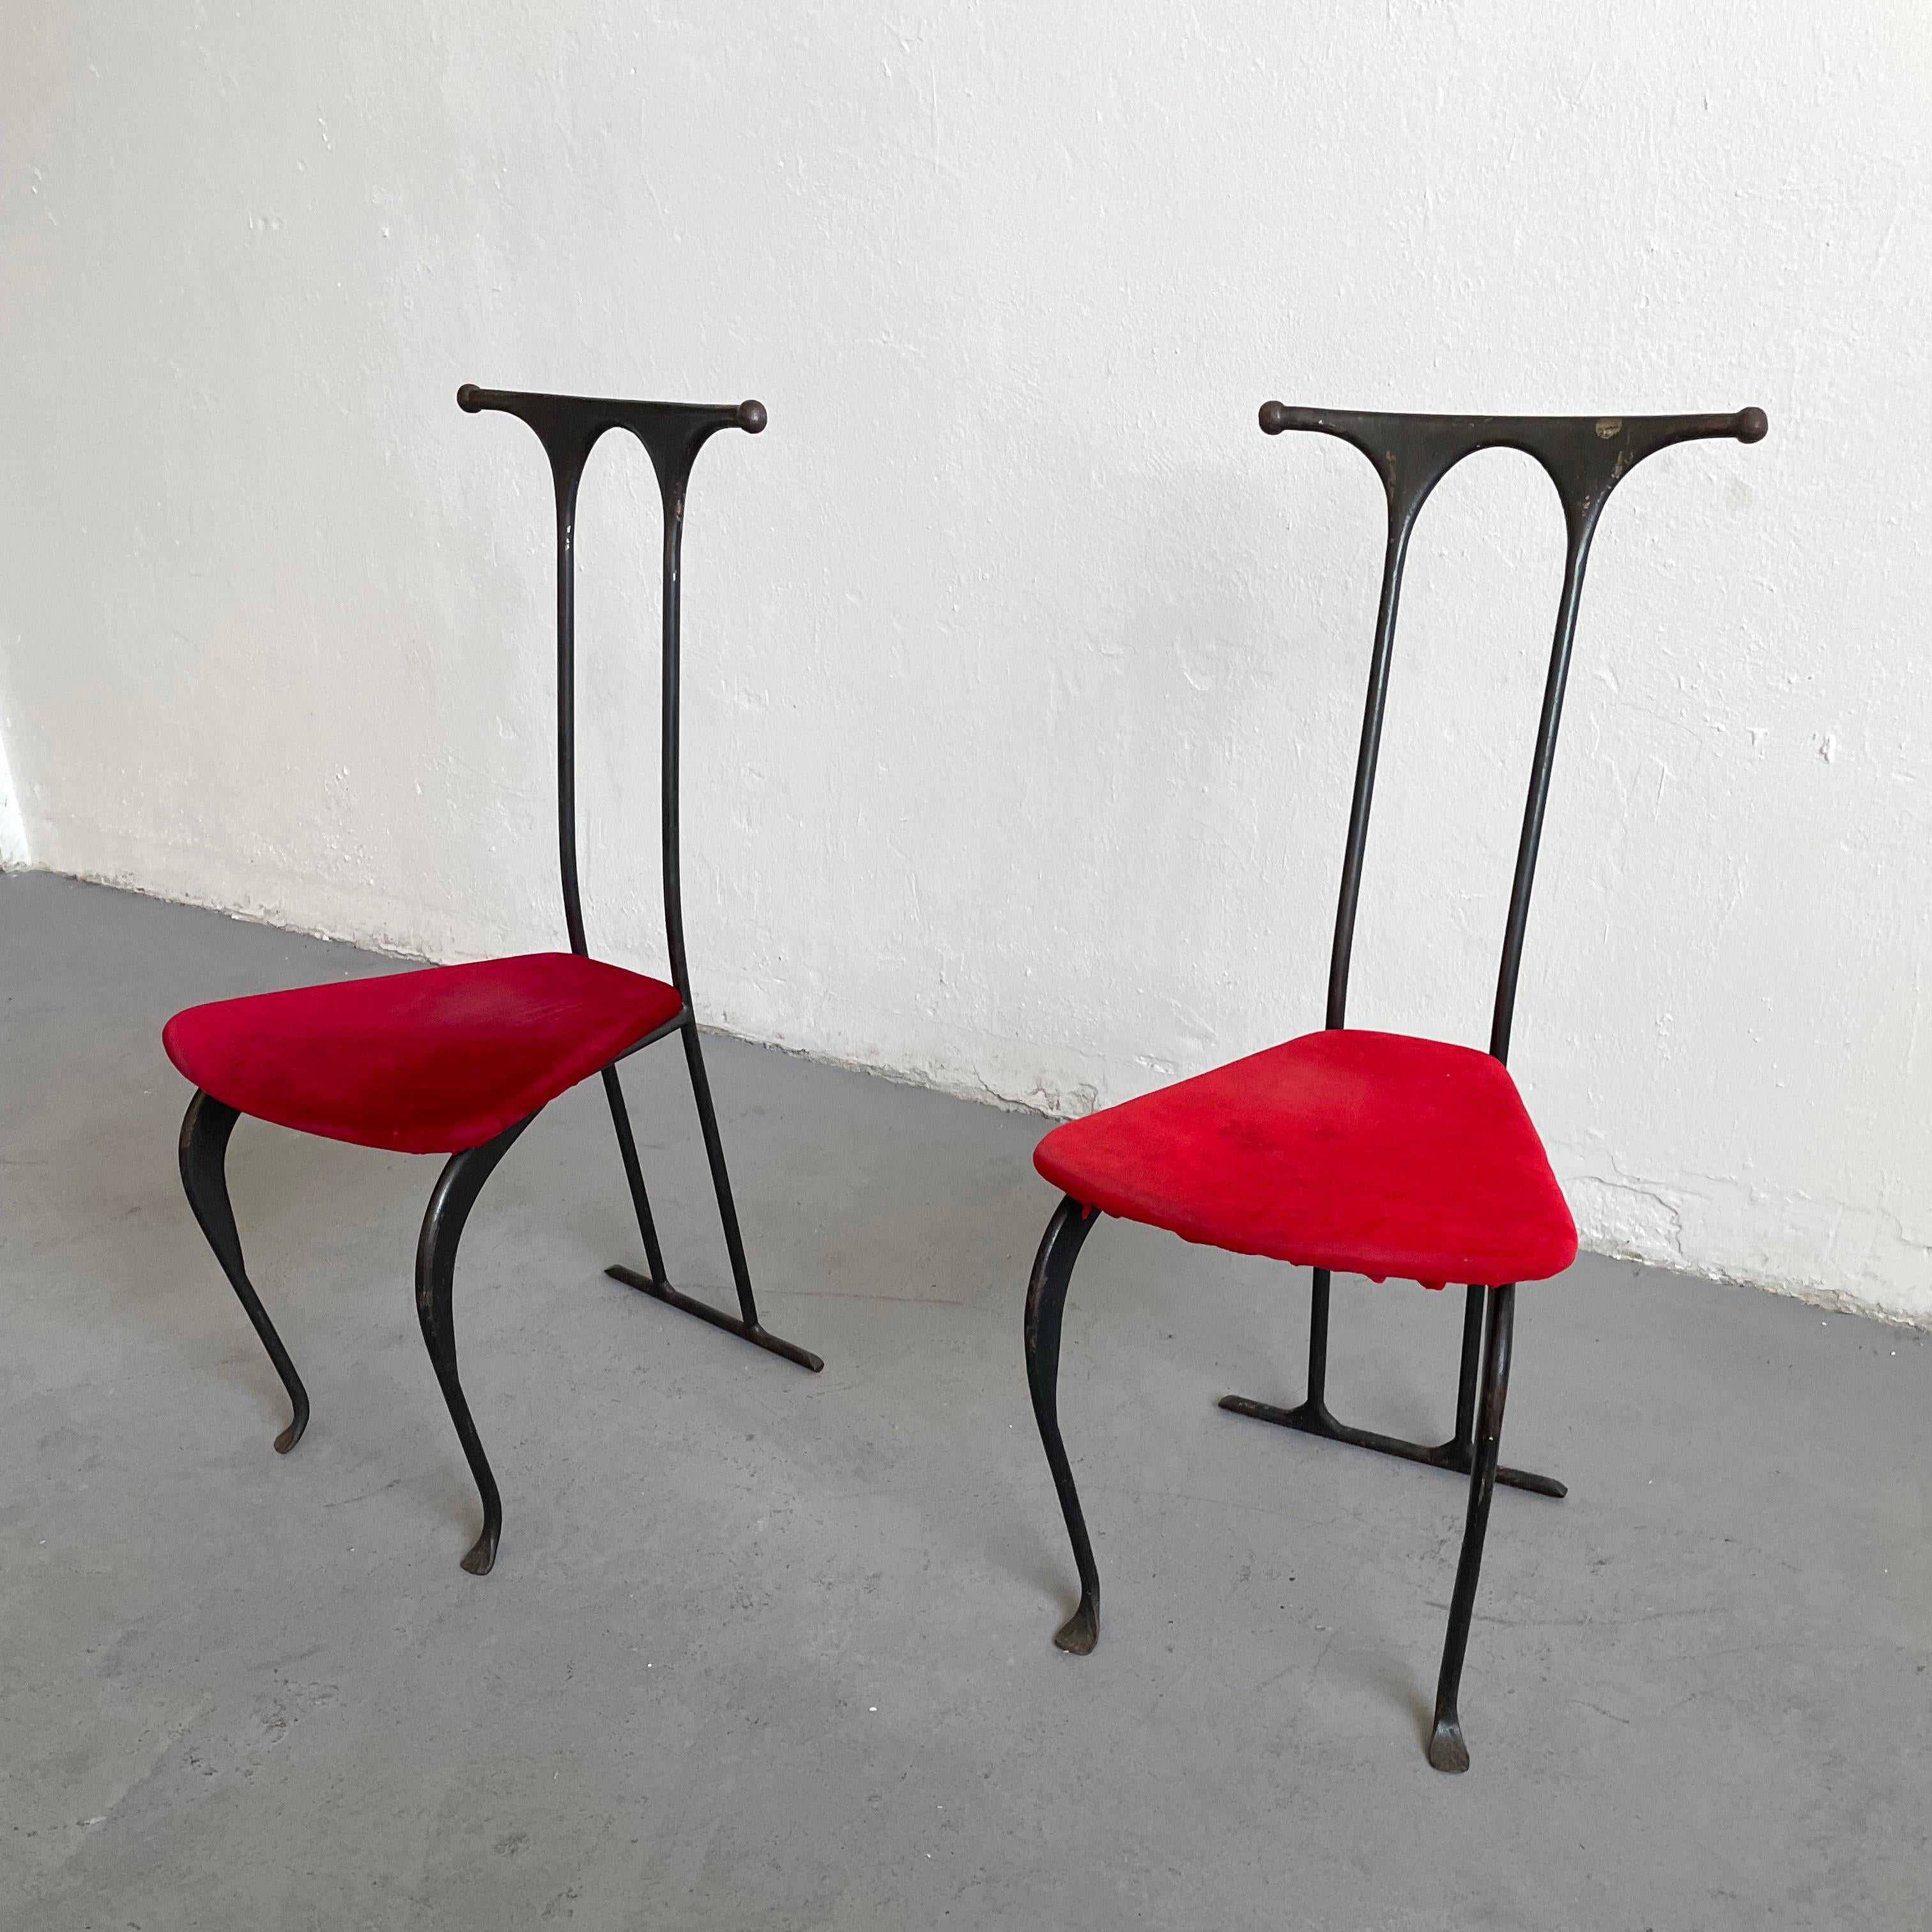 Polish Pair of Postmodern Brutalist Artisanal Wrought Iron Chairs, Poland, 1980s